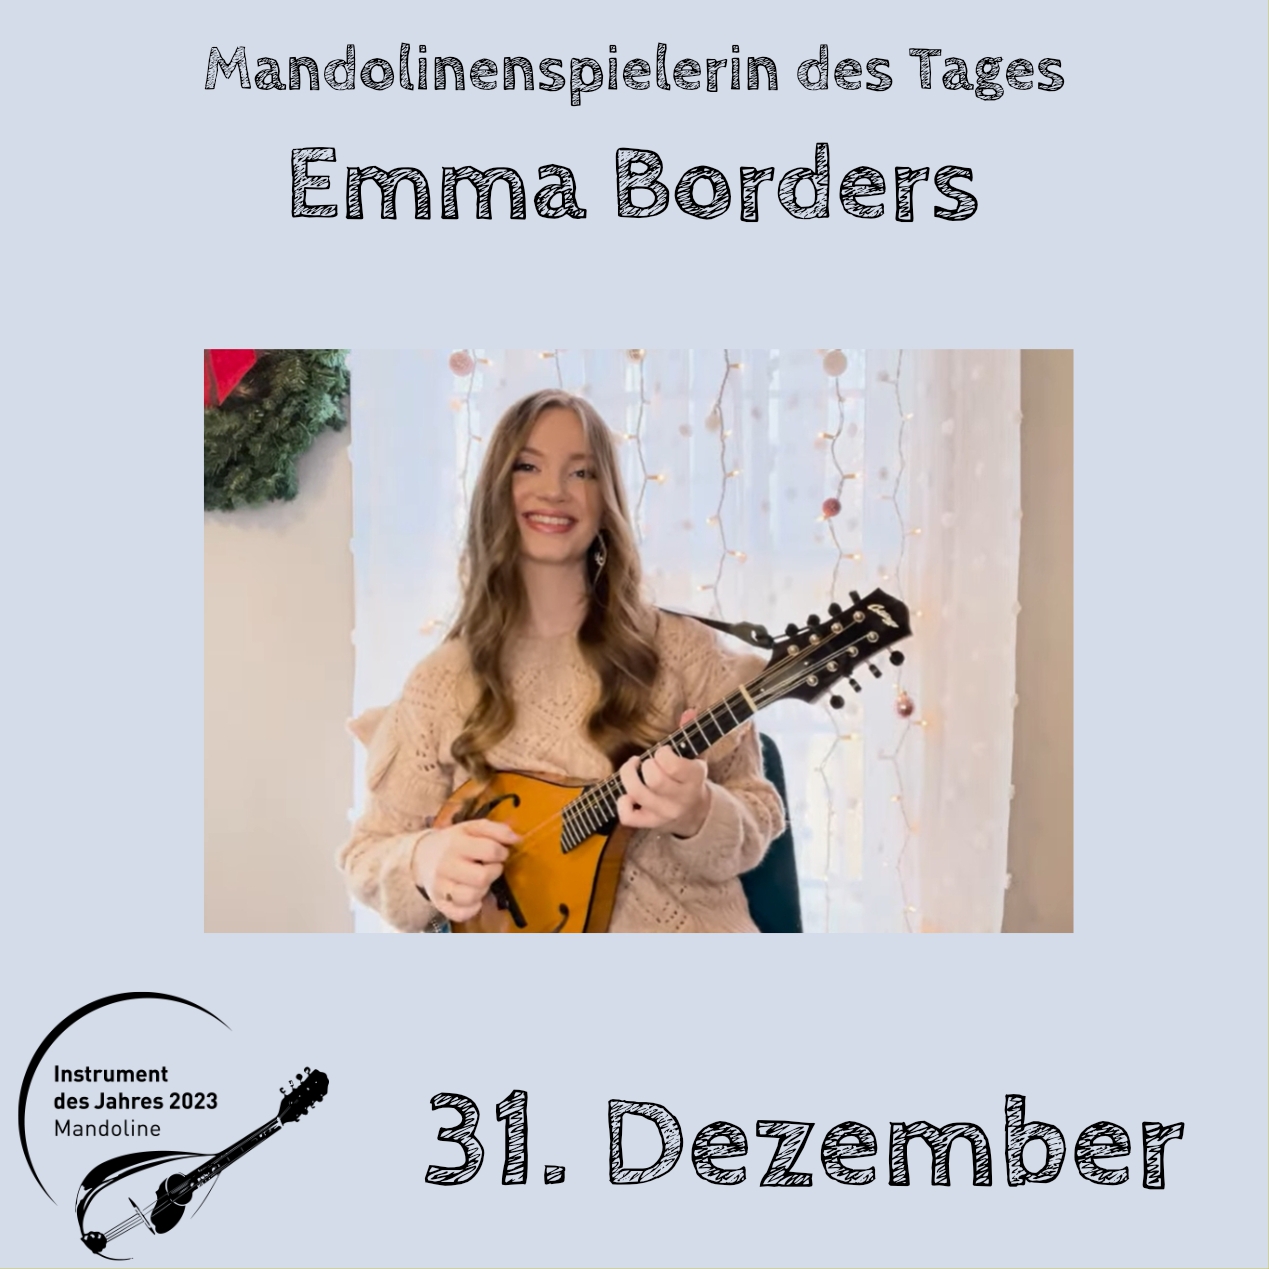 31. Dezember - Emma Borders Instrument des Jahres 2023 Mandolinenspieler Mandolinenspielerin des Tages